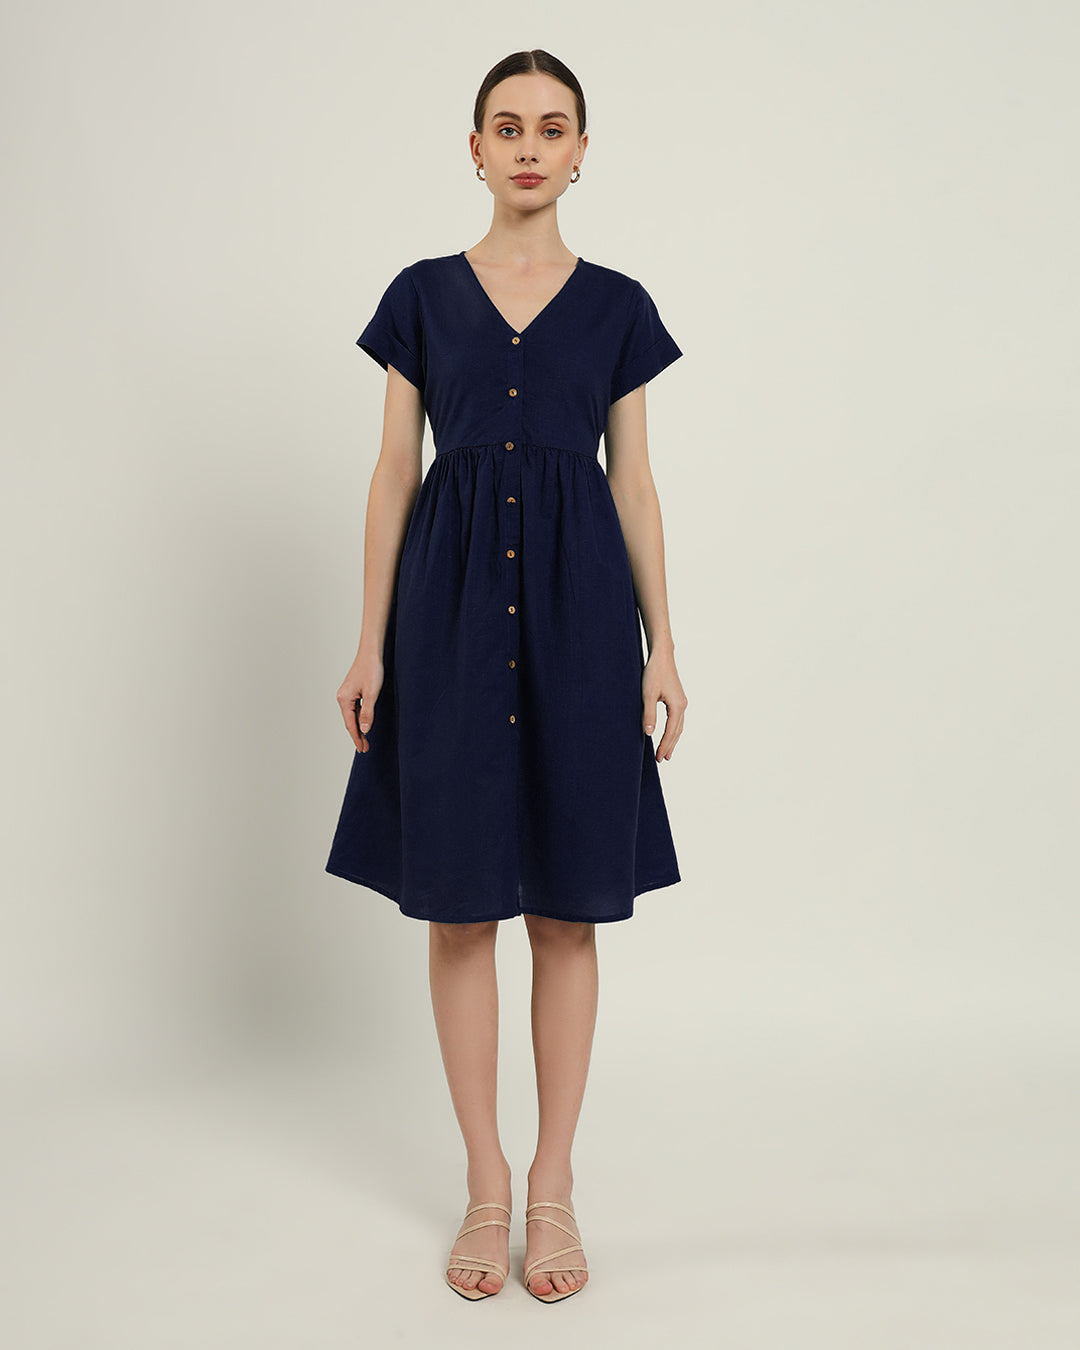 The Valence Daisy Midnight Blue Linen Dress